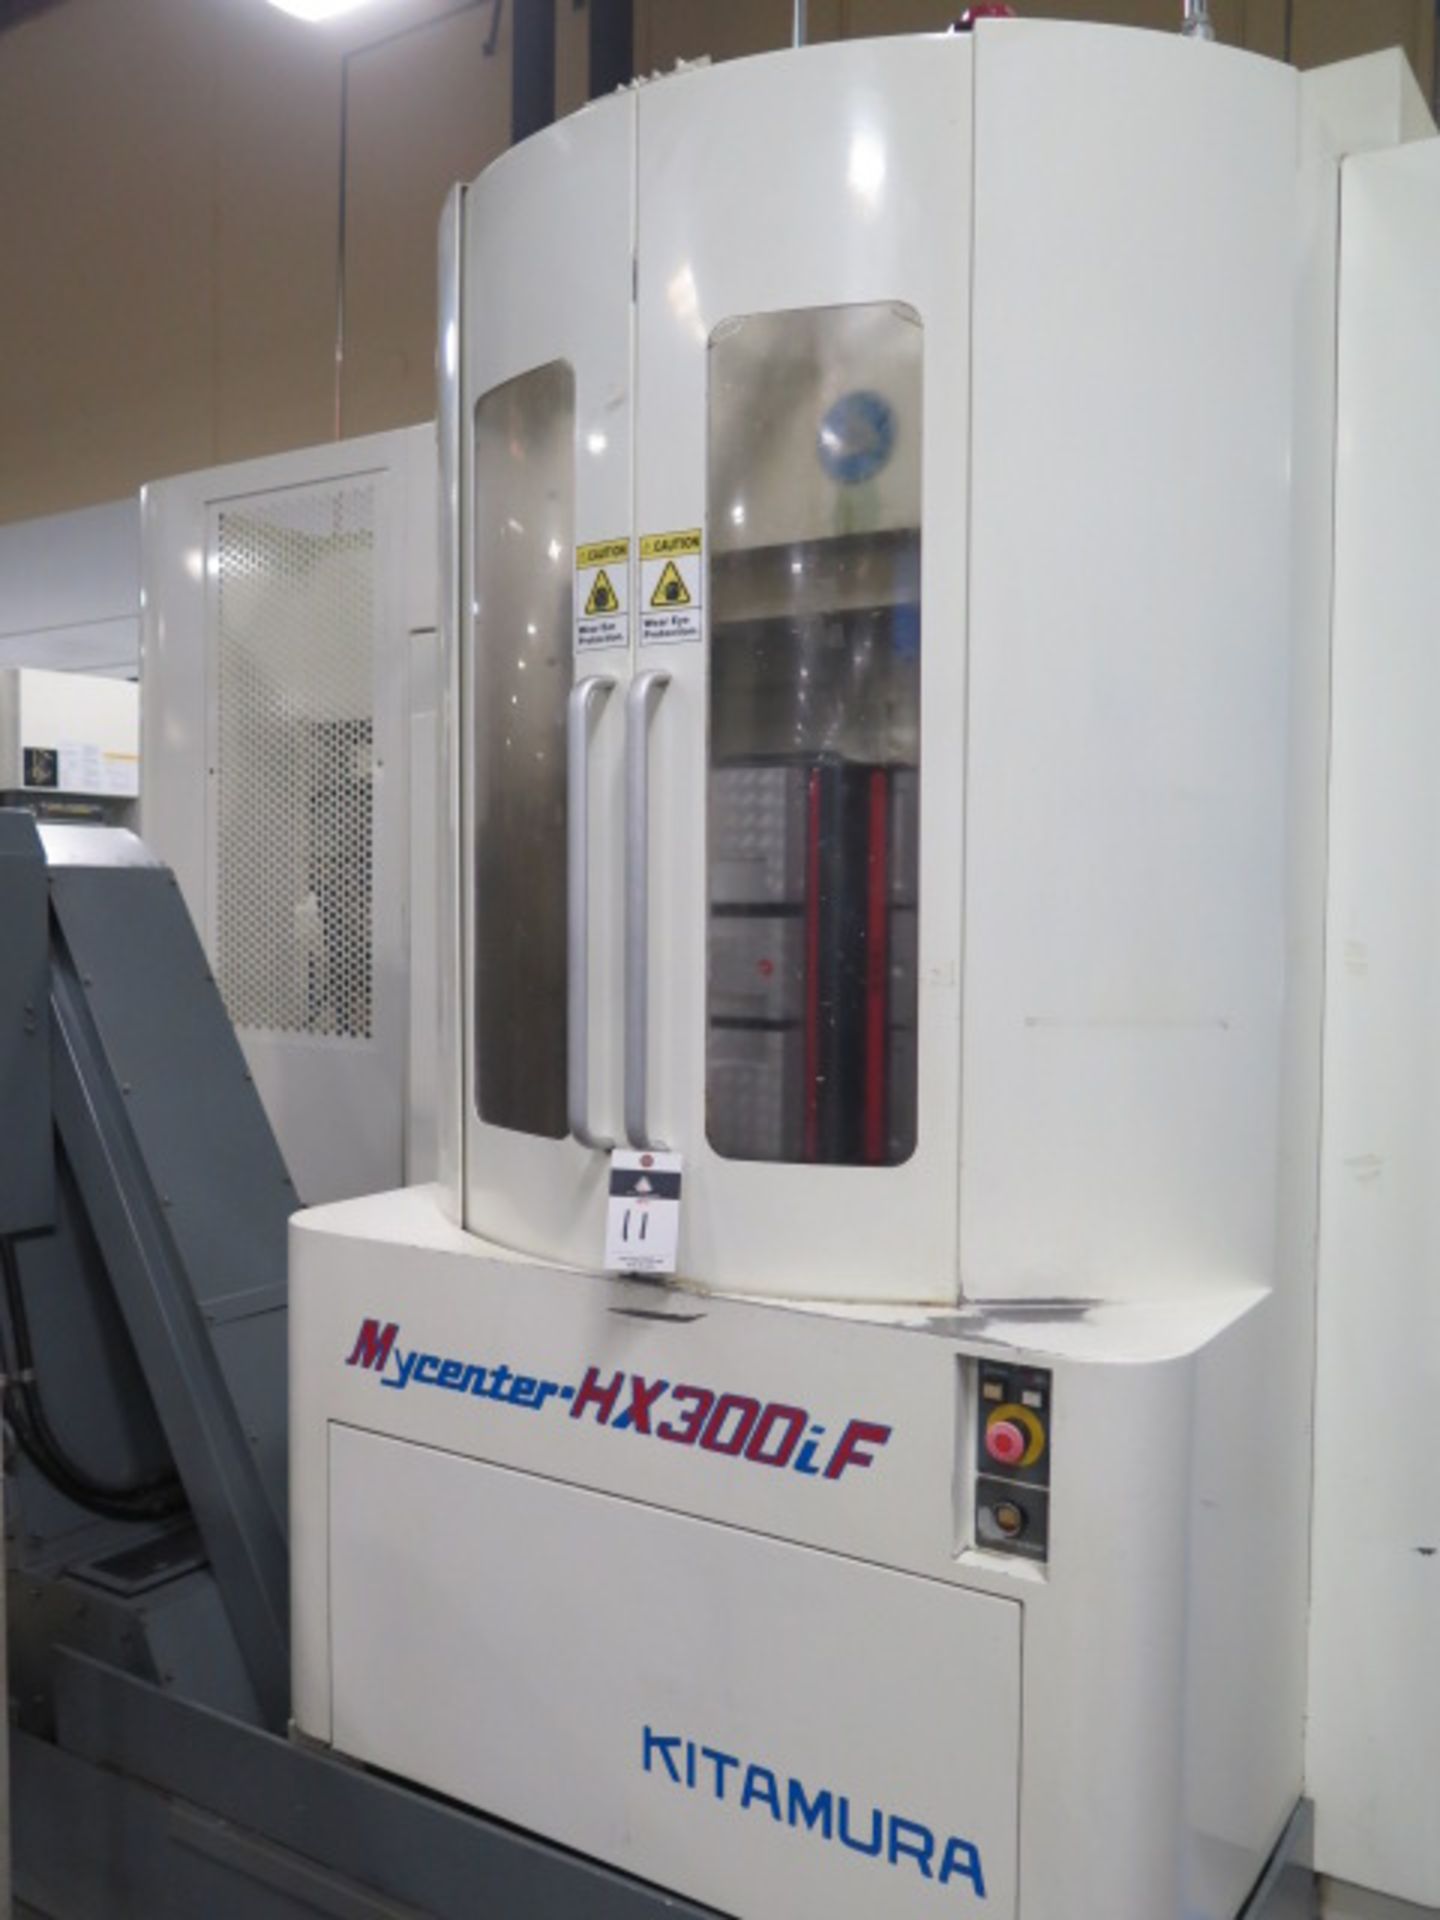 Kitamura Mycenter-HX300iF 2-Pallet 4-Axis CNC Horizontal Machining Center s/n 40802 w/ Fanuc Series - Image 3 of 19